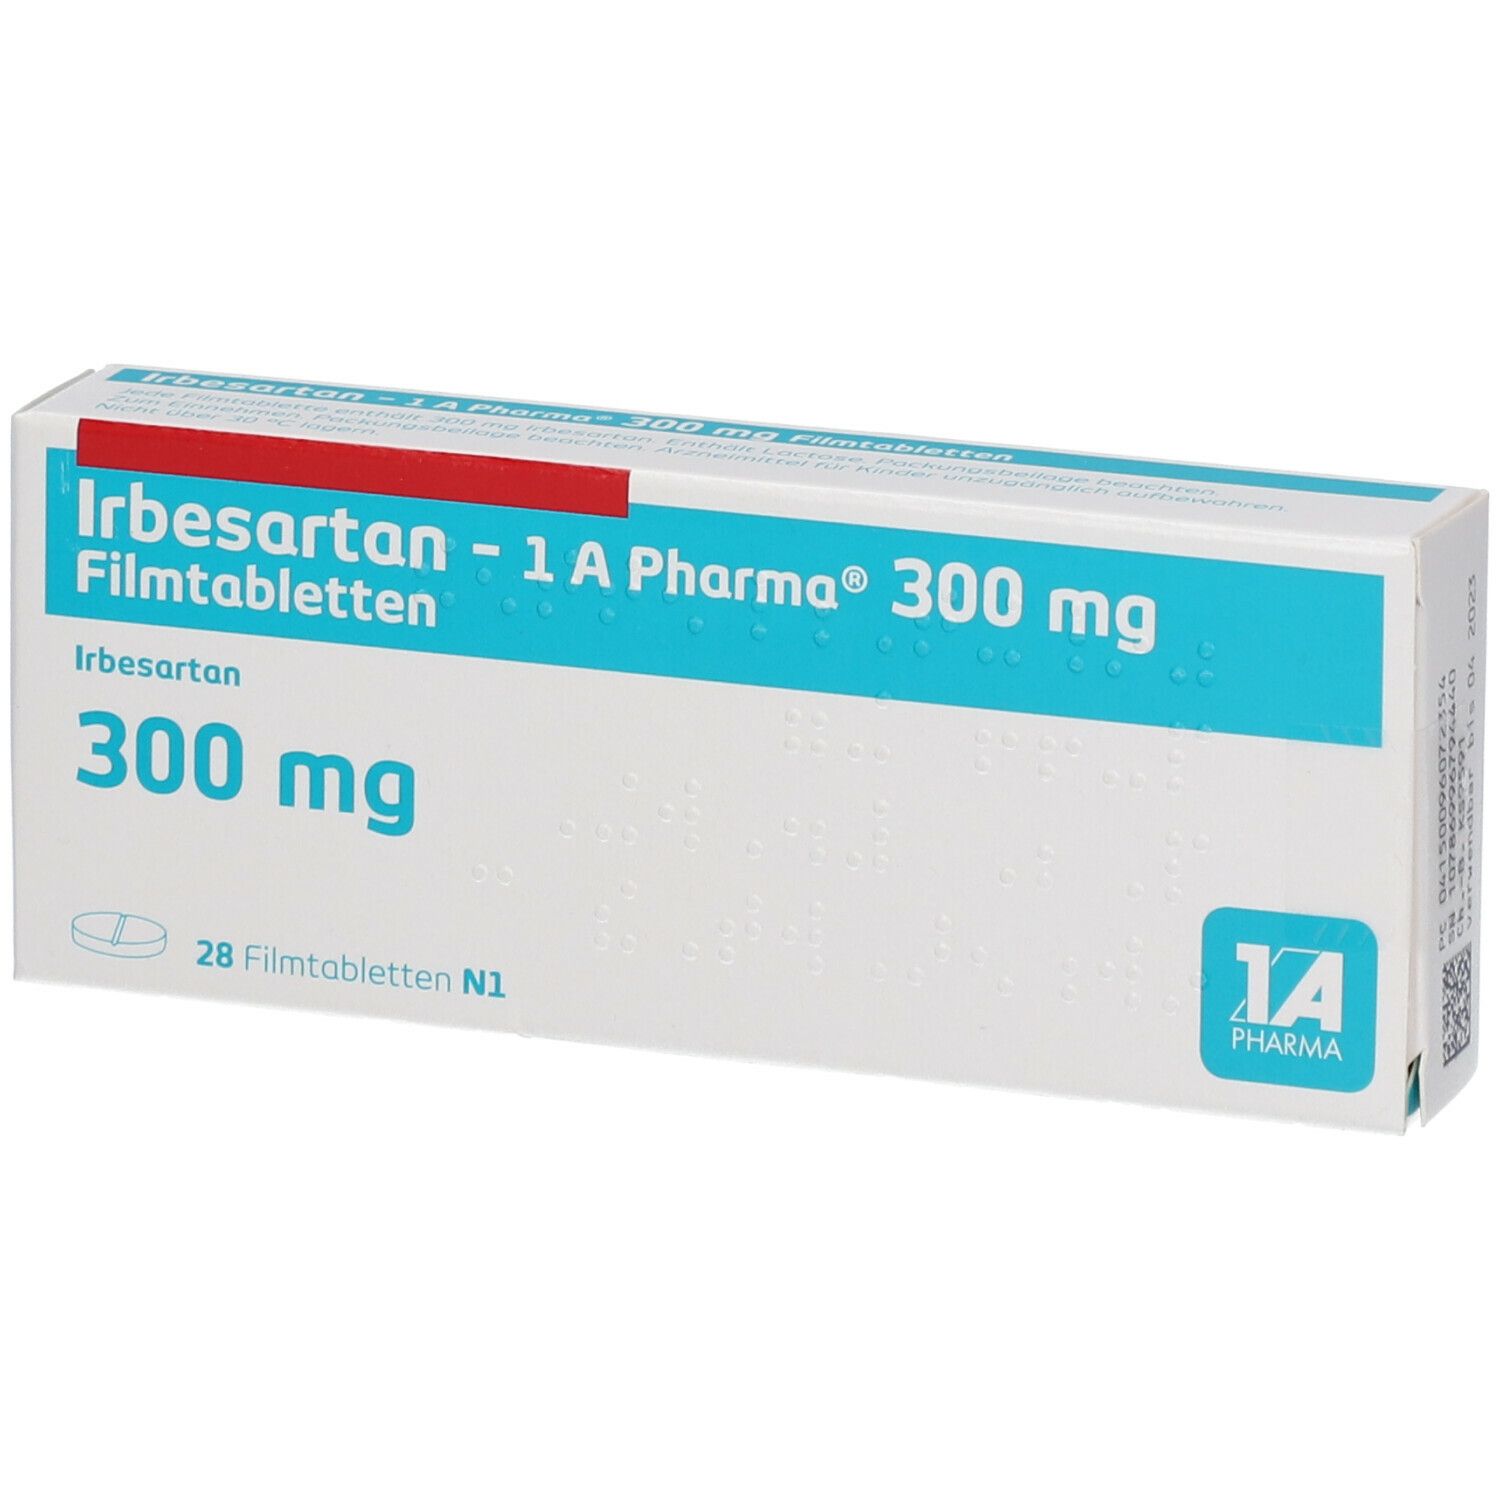 Irbesartan - 1 A Pharma® 300 mg